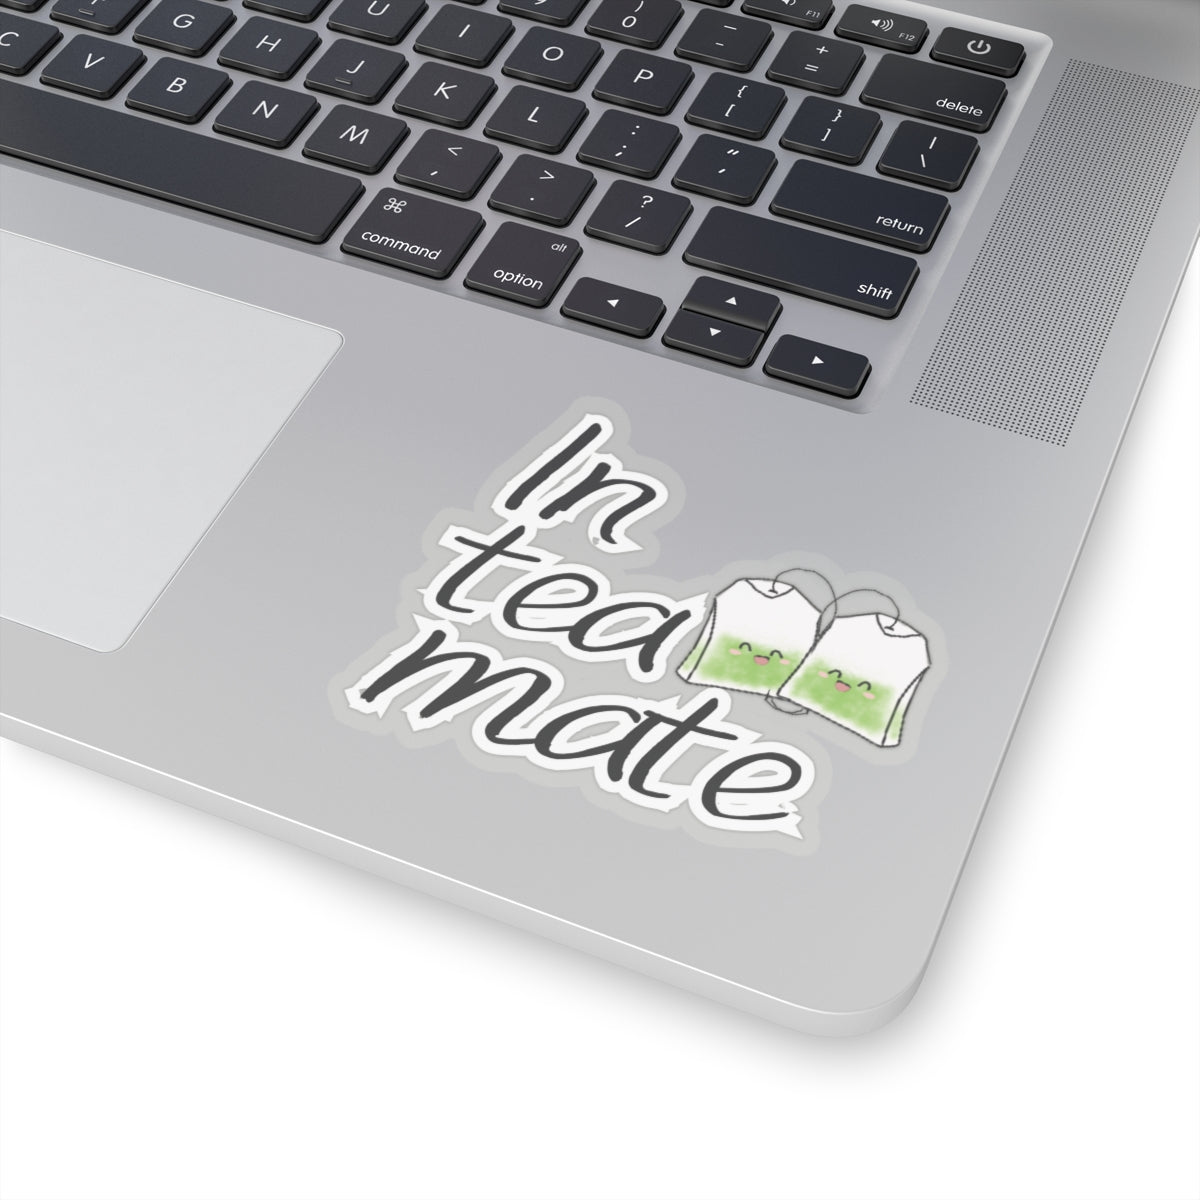 In Tea Mate Kiss-Cut Stickers-Paper products-mysticalcherry